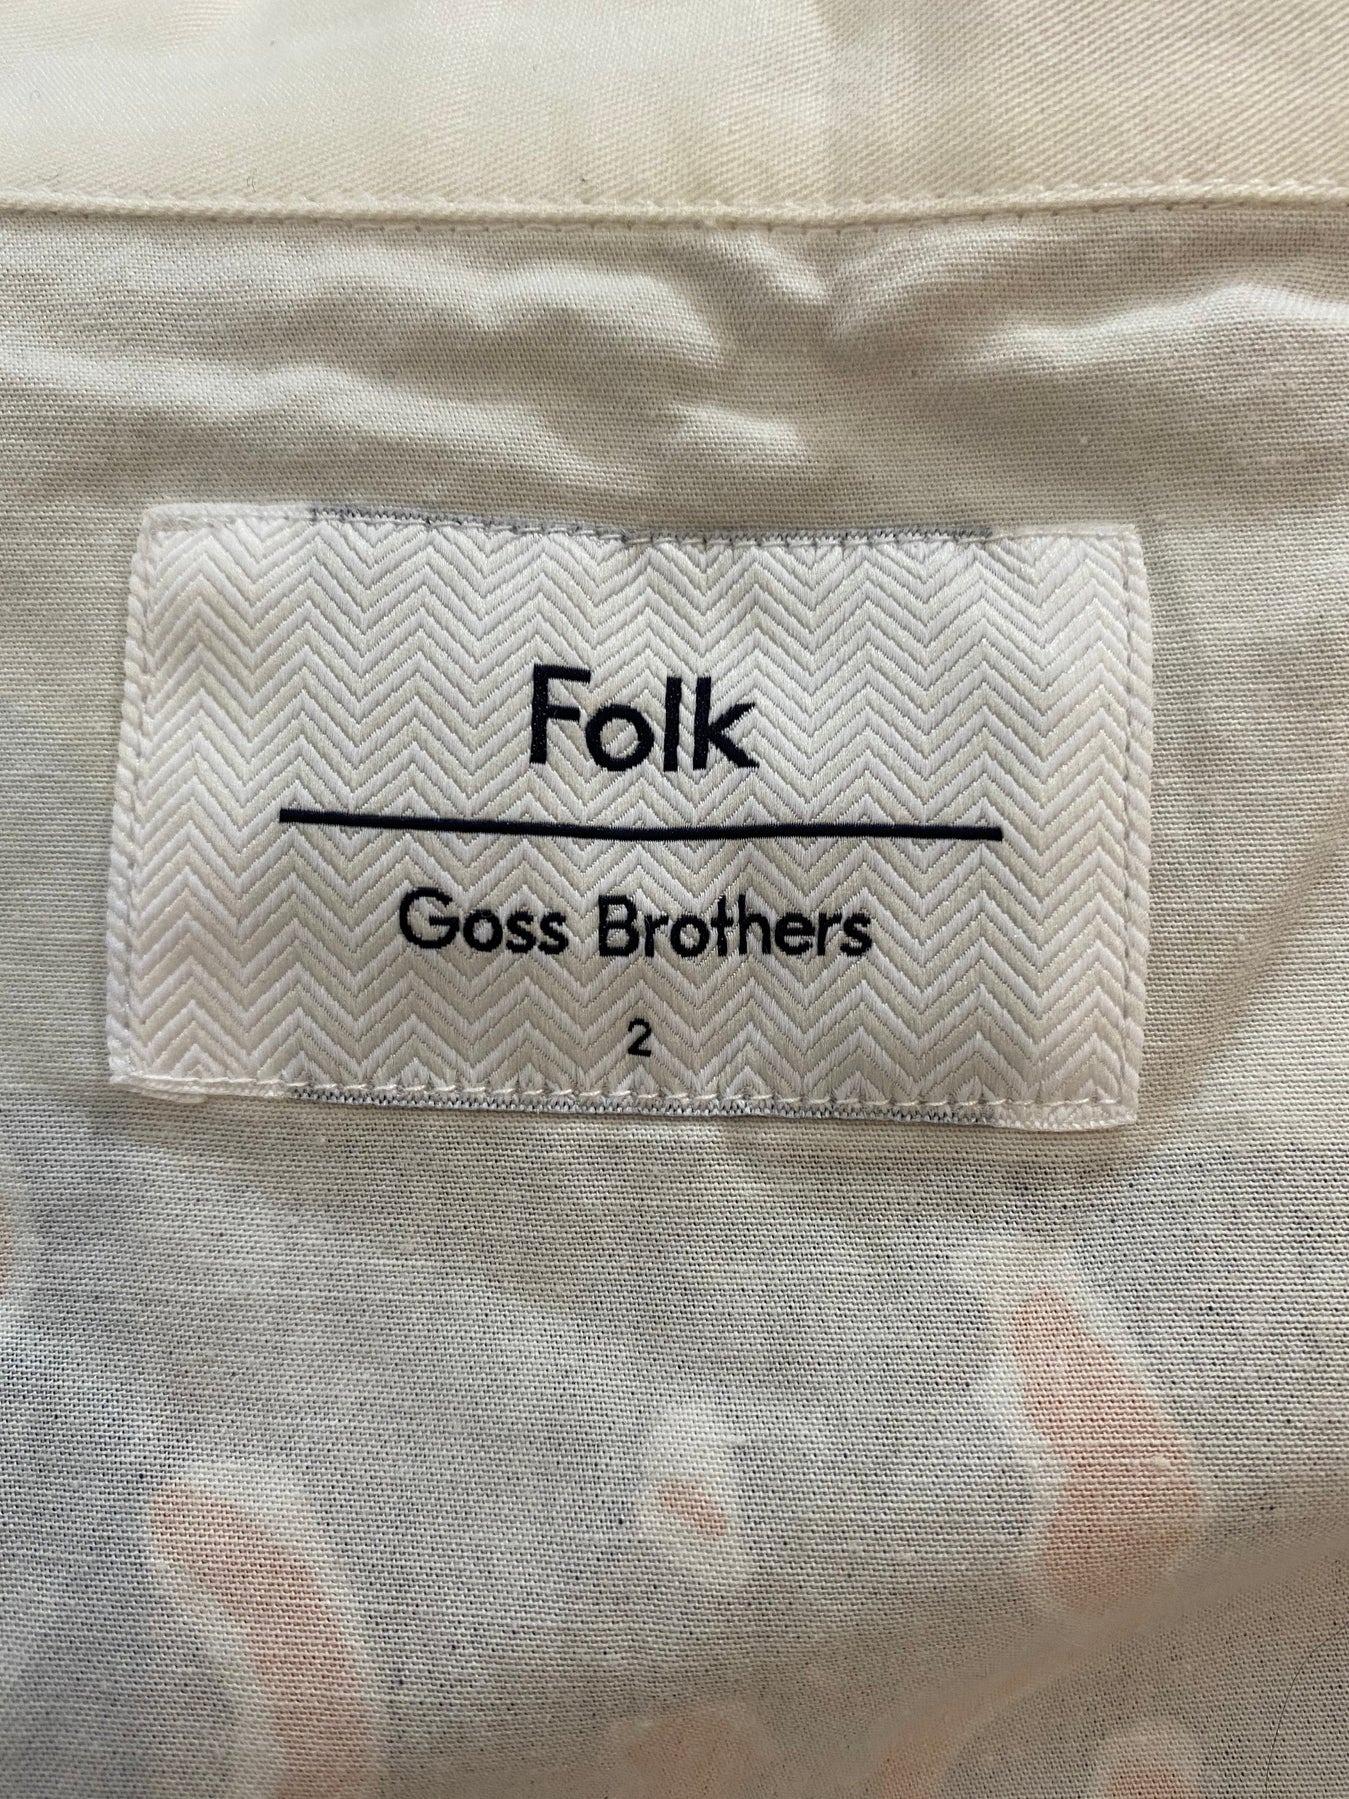 Folk X Goss Brothers Sunset Shirt For Sale 2